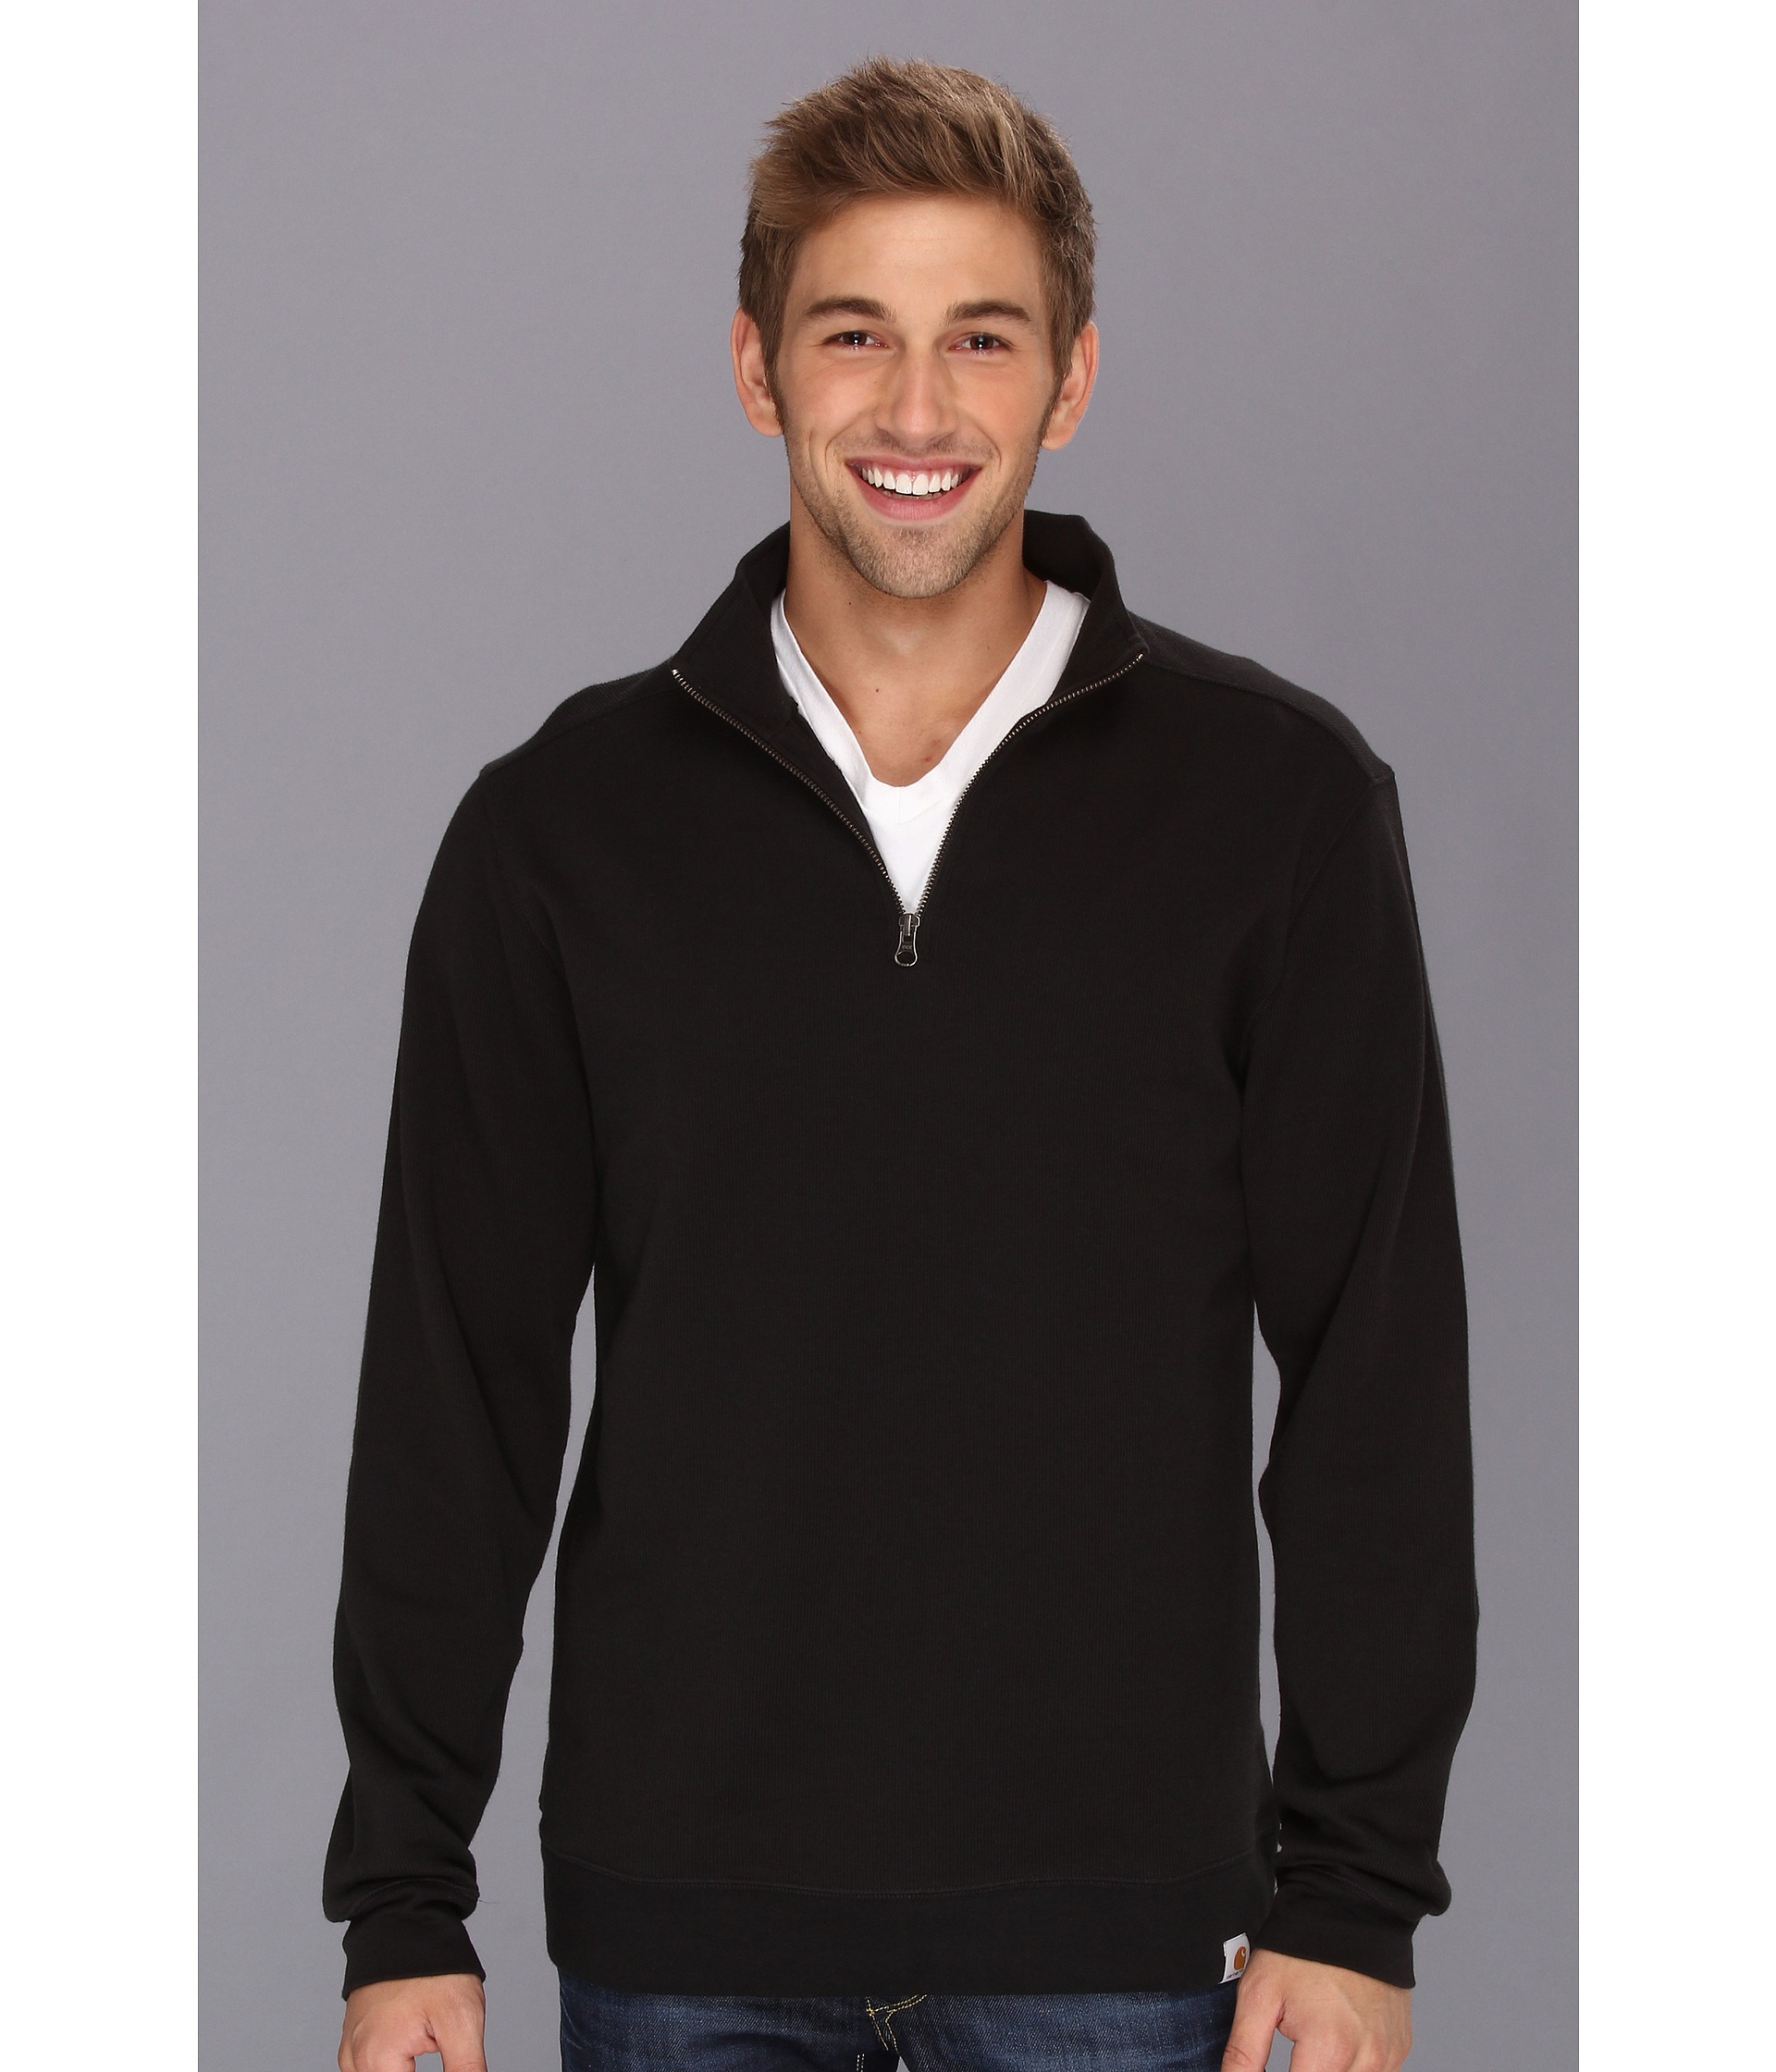 Carhartt Sweater Knit Quarter Zip in Black for Men - Lyst